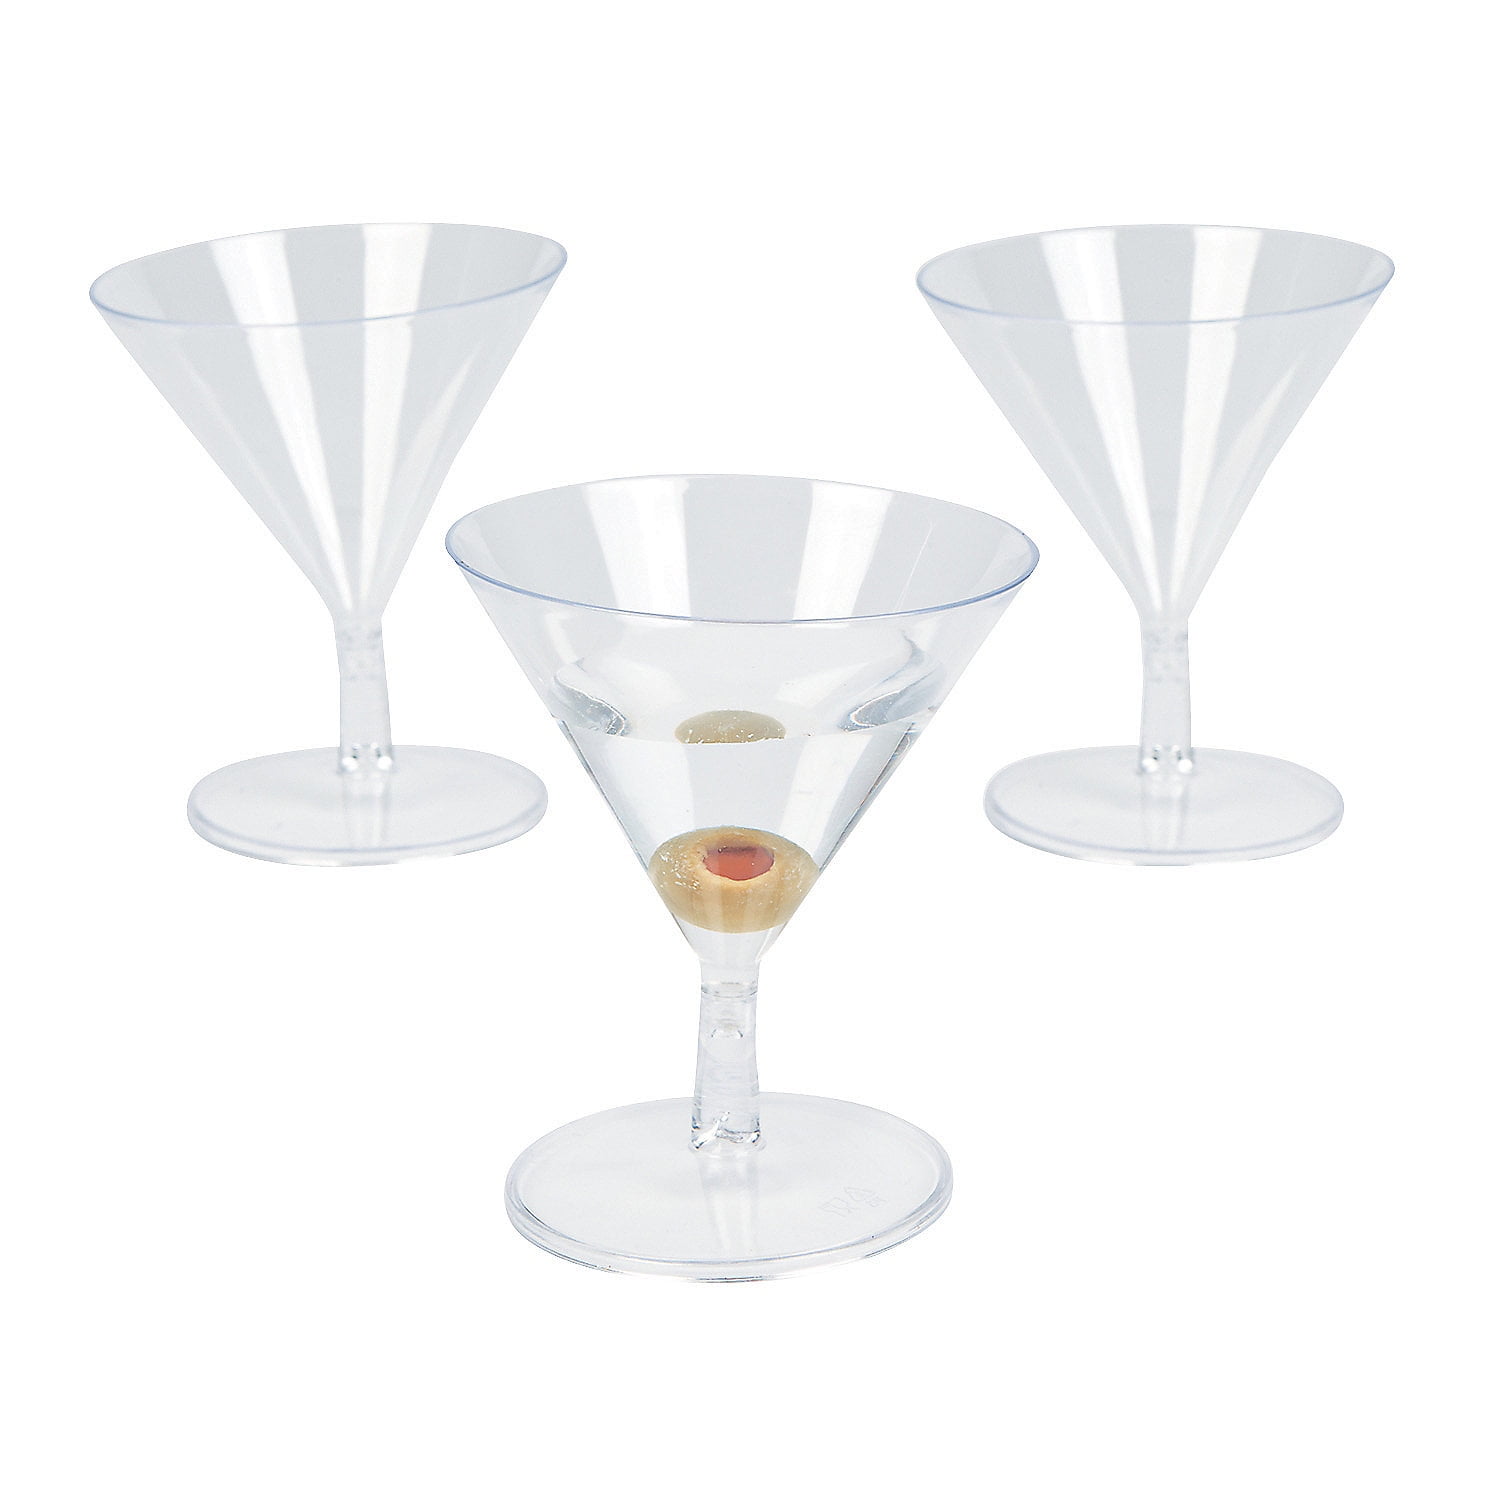 Viski Double Walled Cocktail Glasses - Insulated Martini Glasses with Cut  Crystal Design - Dishwasher Safe Borosilicate Glass 8.5oz Set of 2